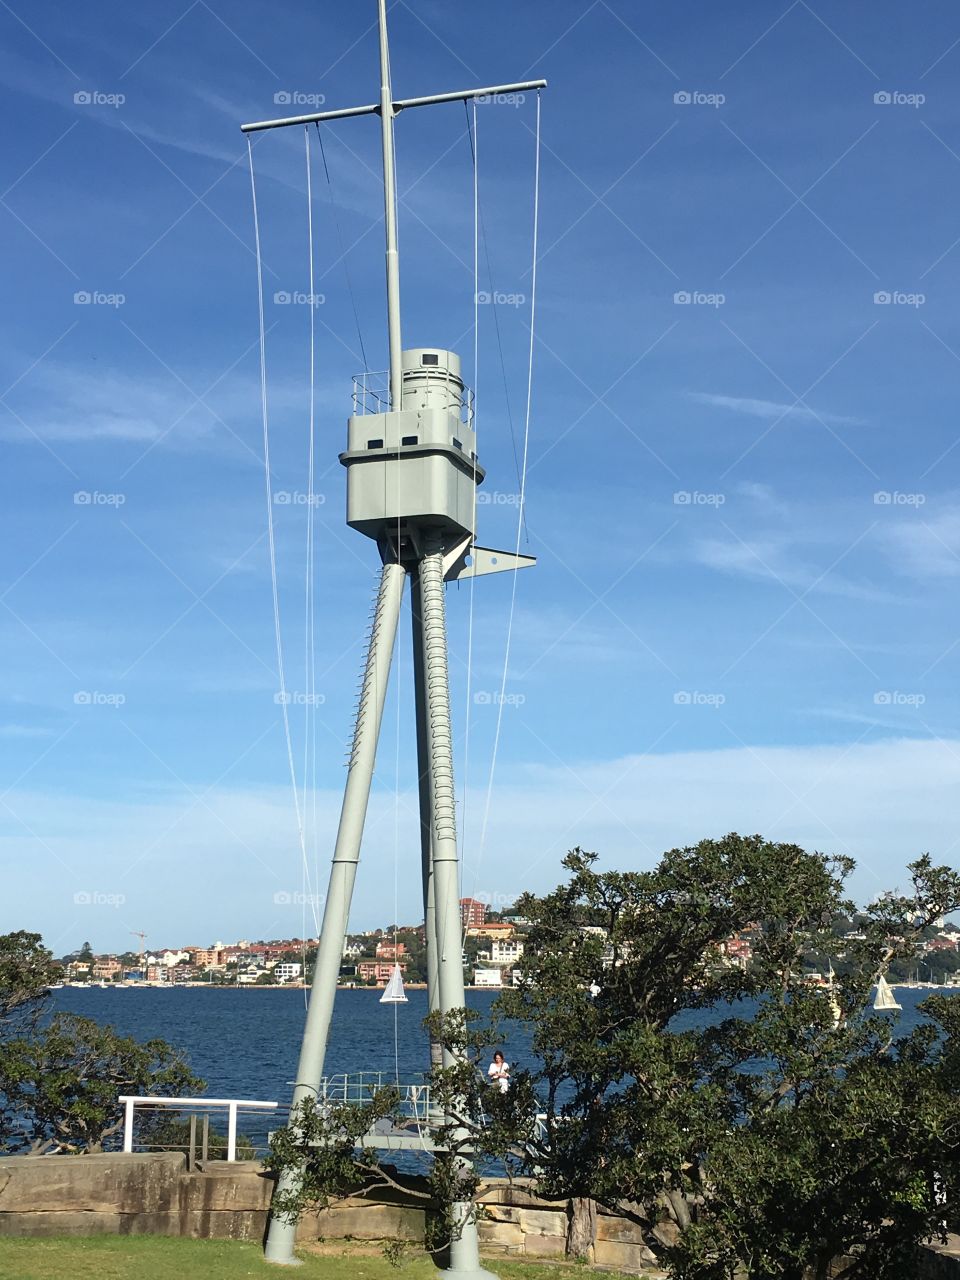 Bradley's Head - HMAS Sydney mast